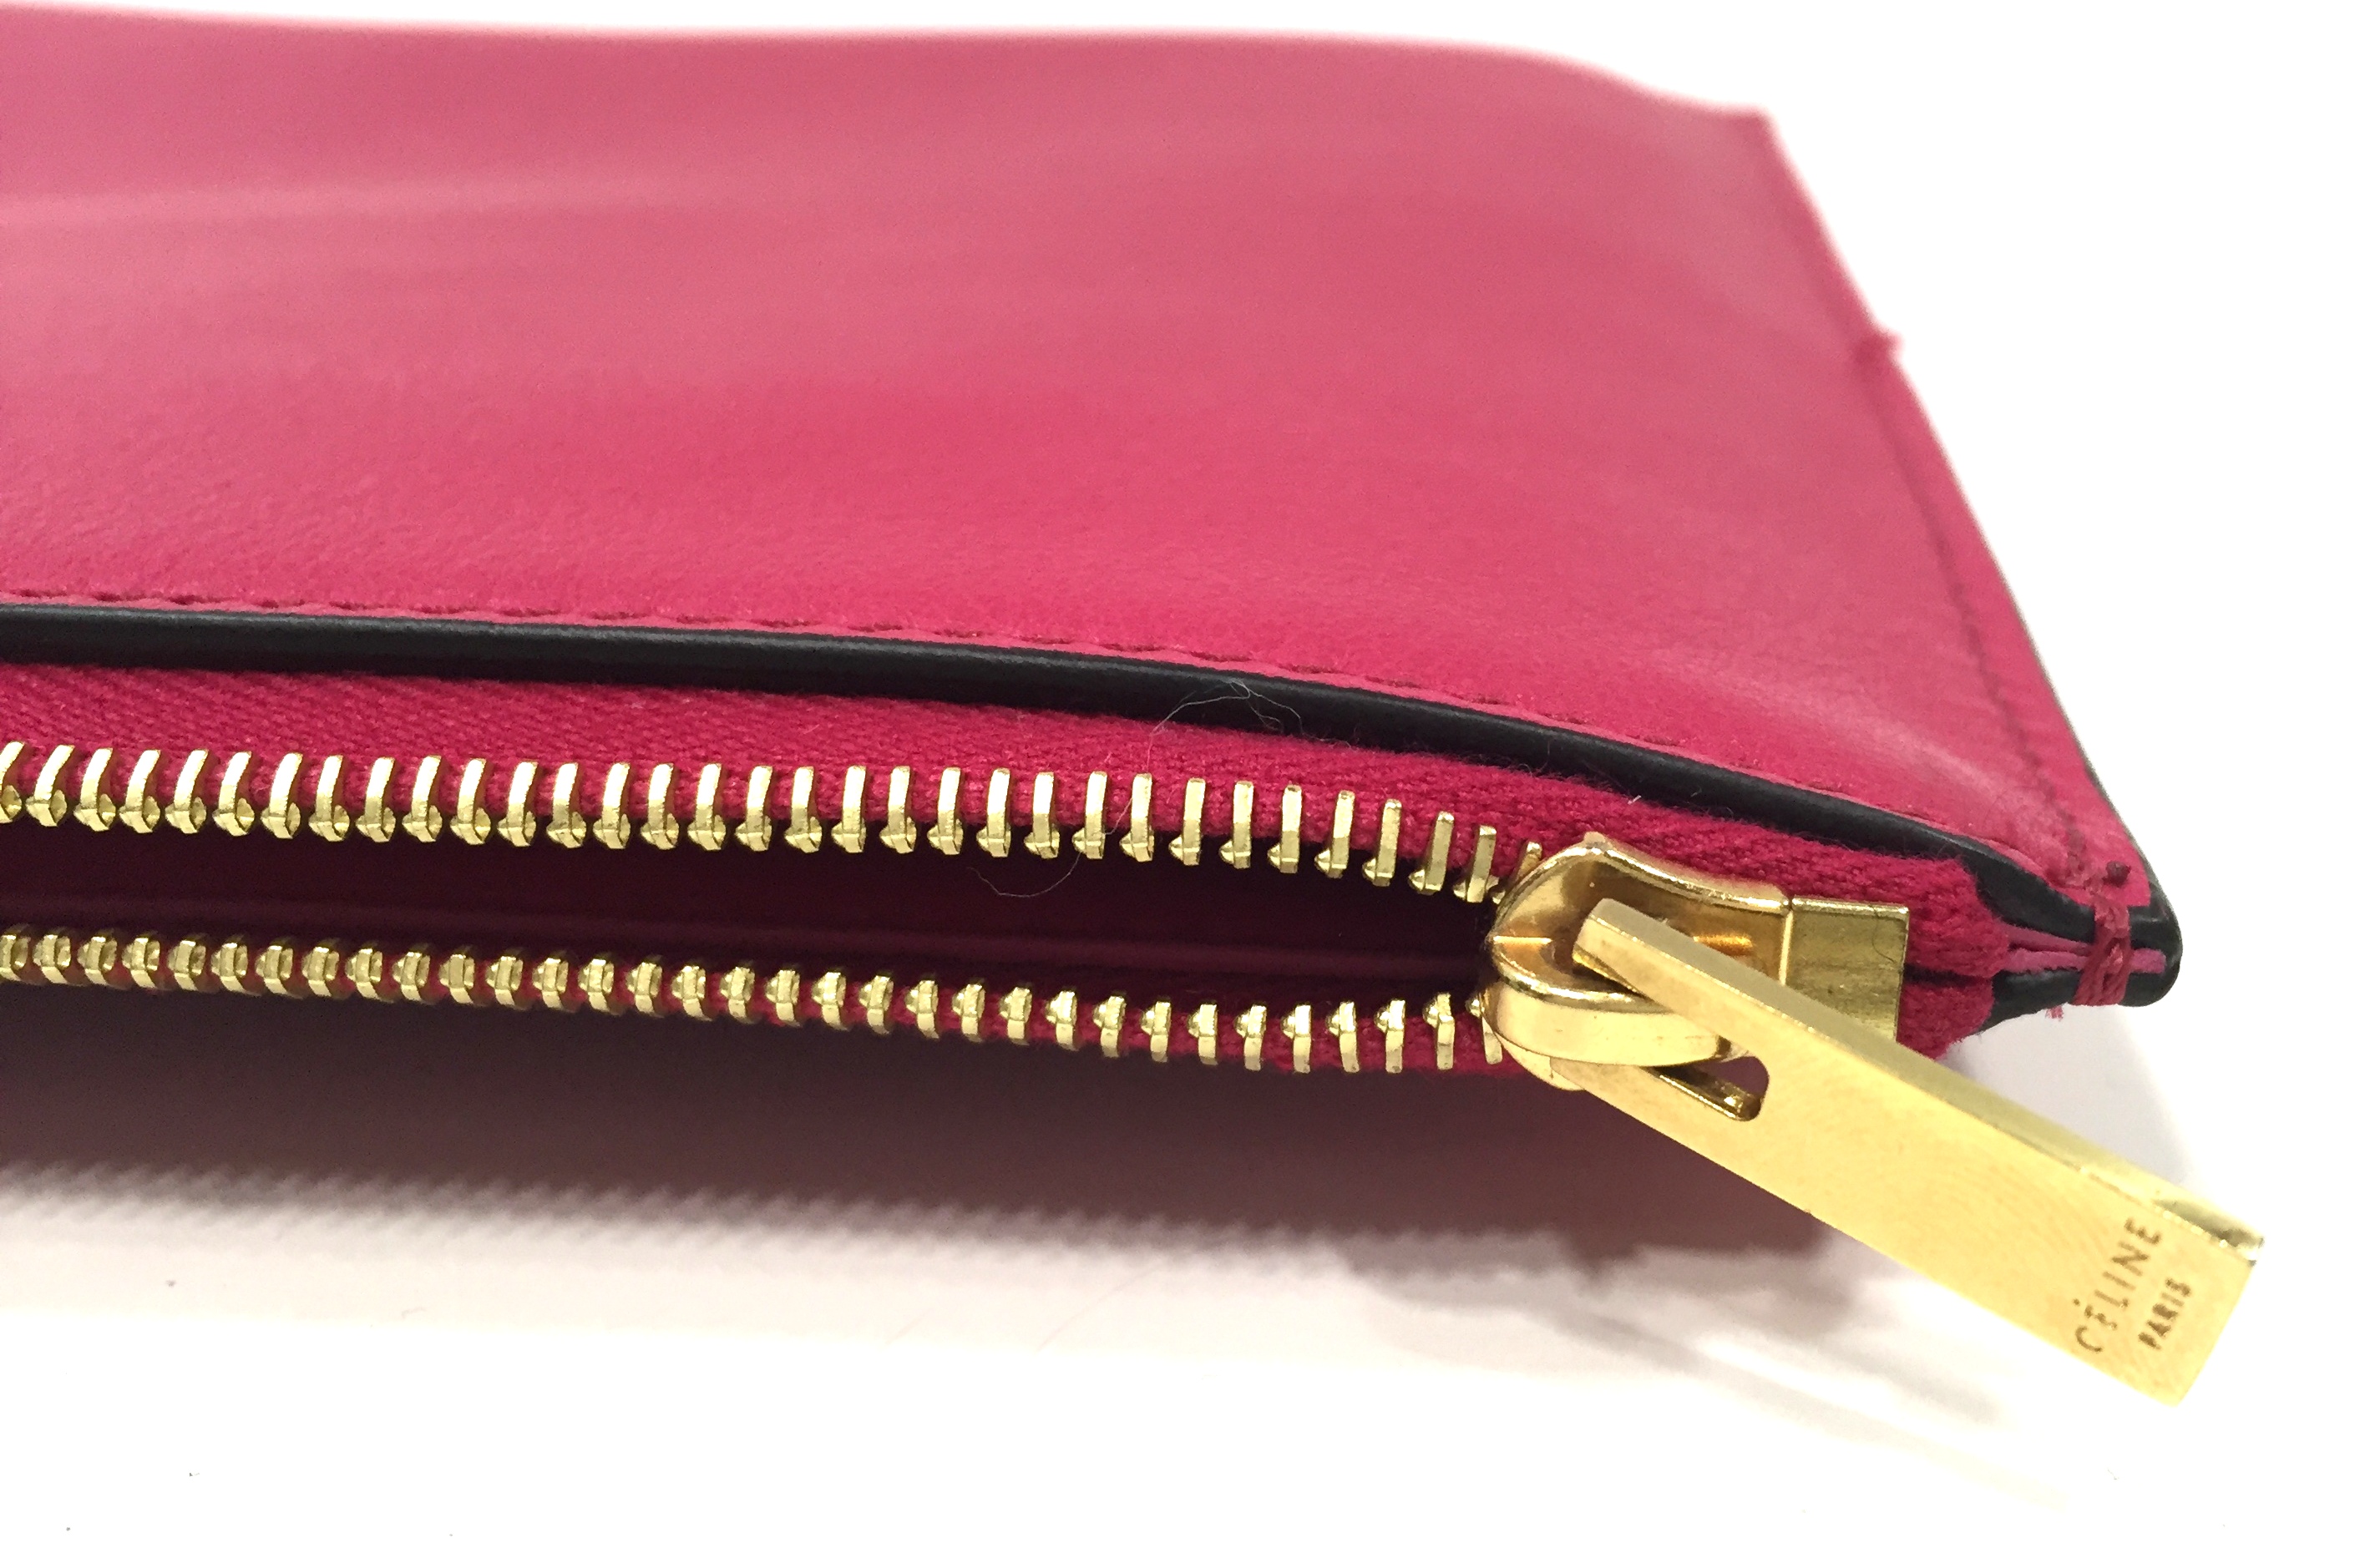 Celine Fuschia and Cream Leather Pocket Clutch Handbag | Alexis ...  